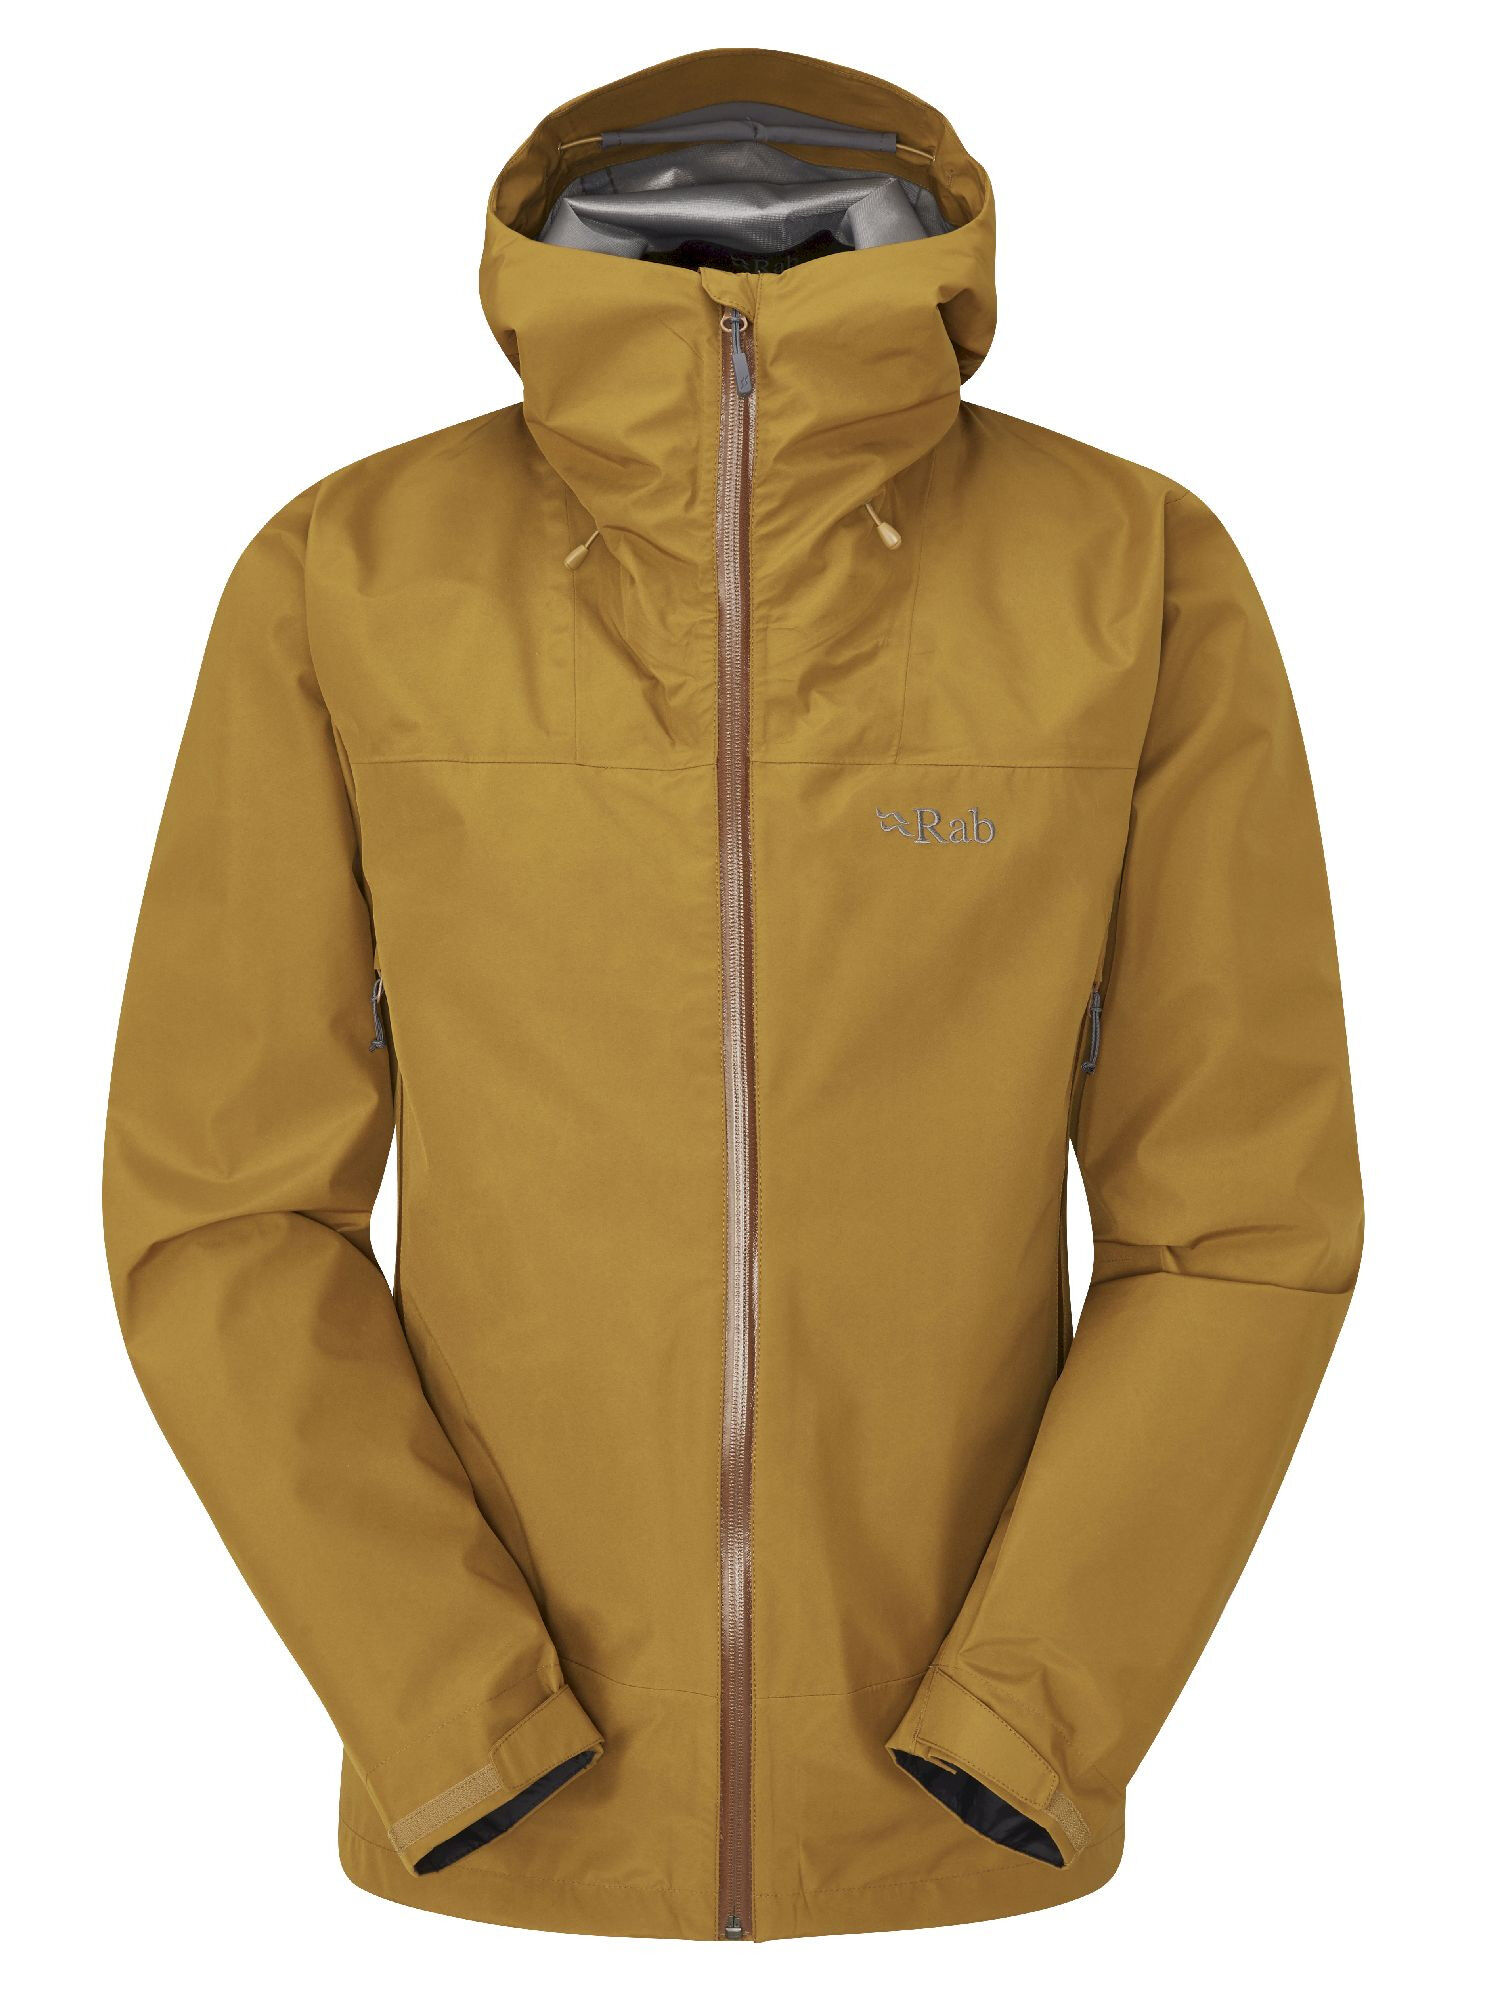 Rab Namche GTX Jacket - Waterproof jacket - Men's | Hardloop